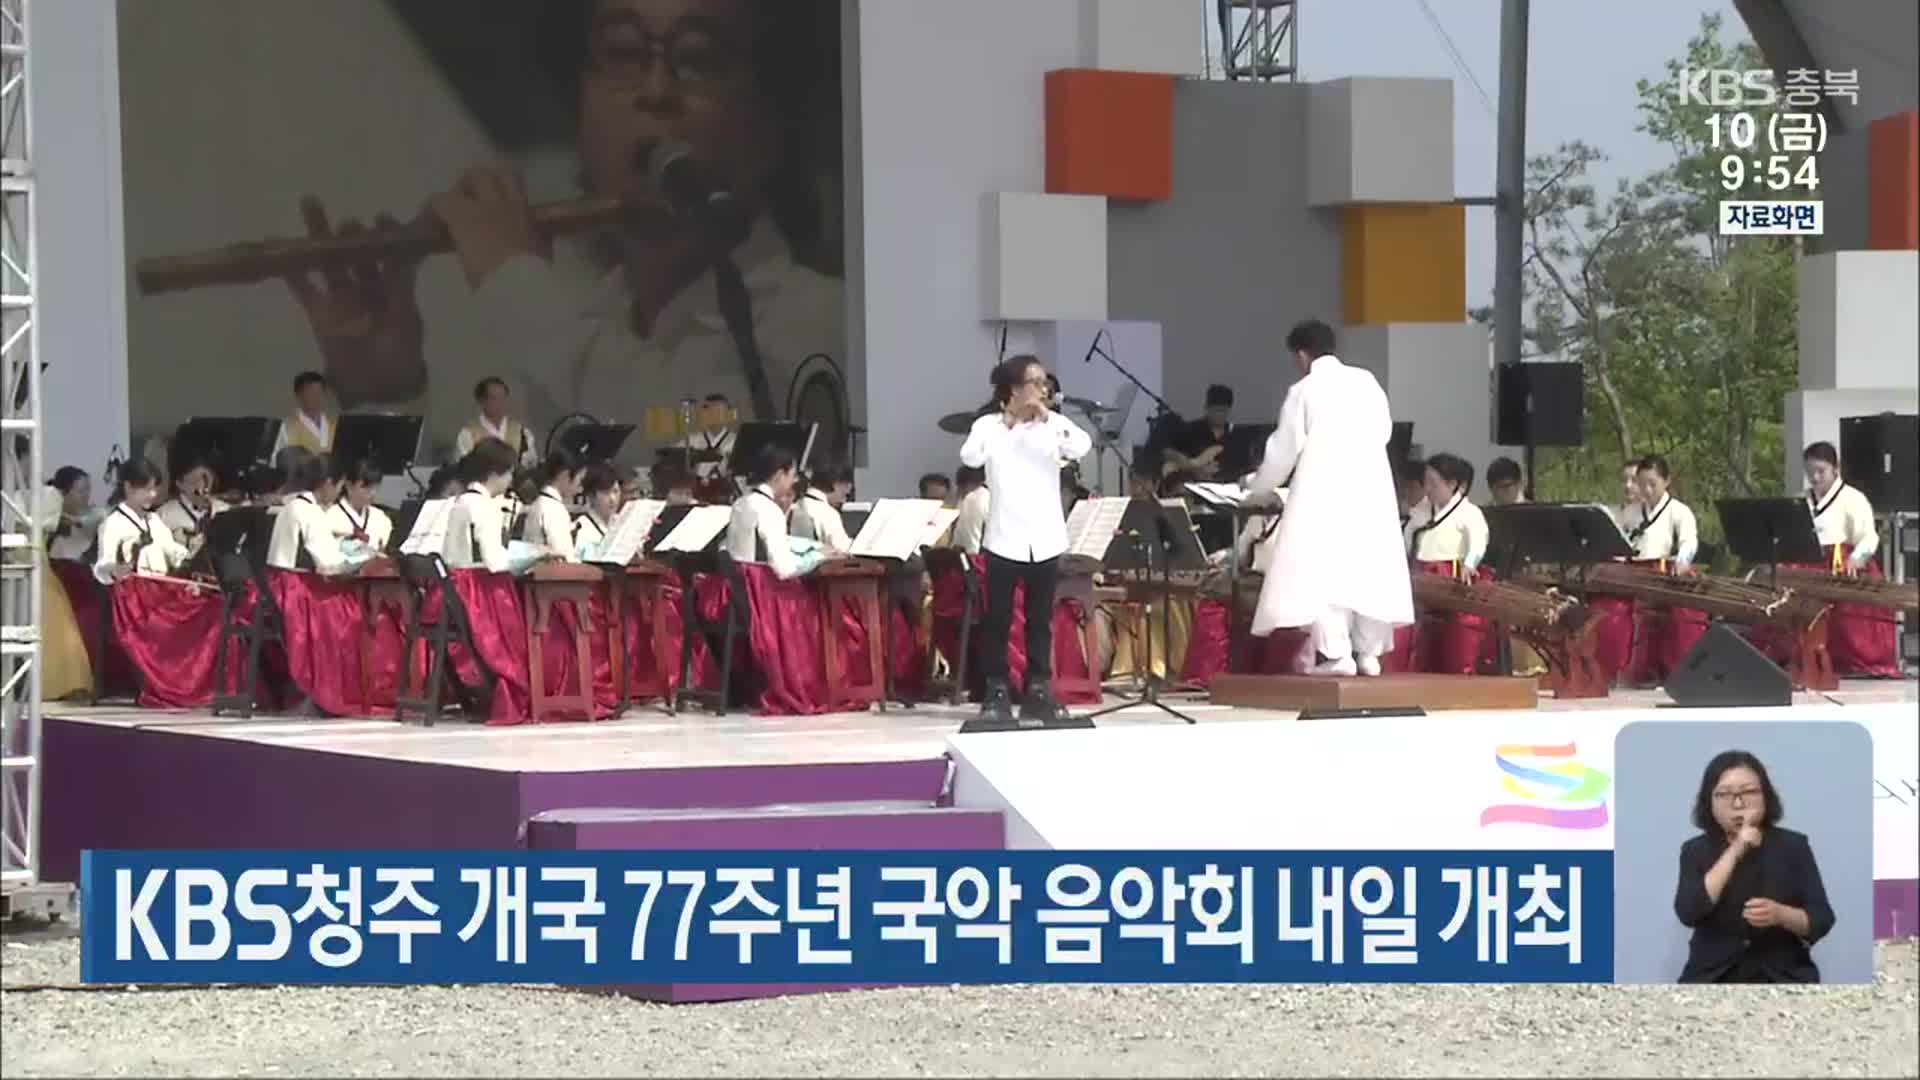 KBS청주 개국 77주년 국악 음악회 내일 개최